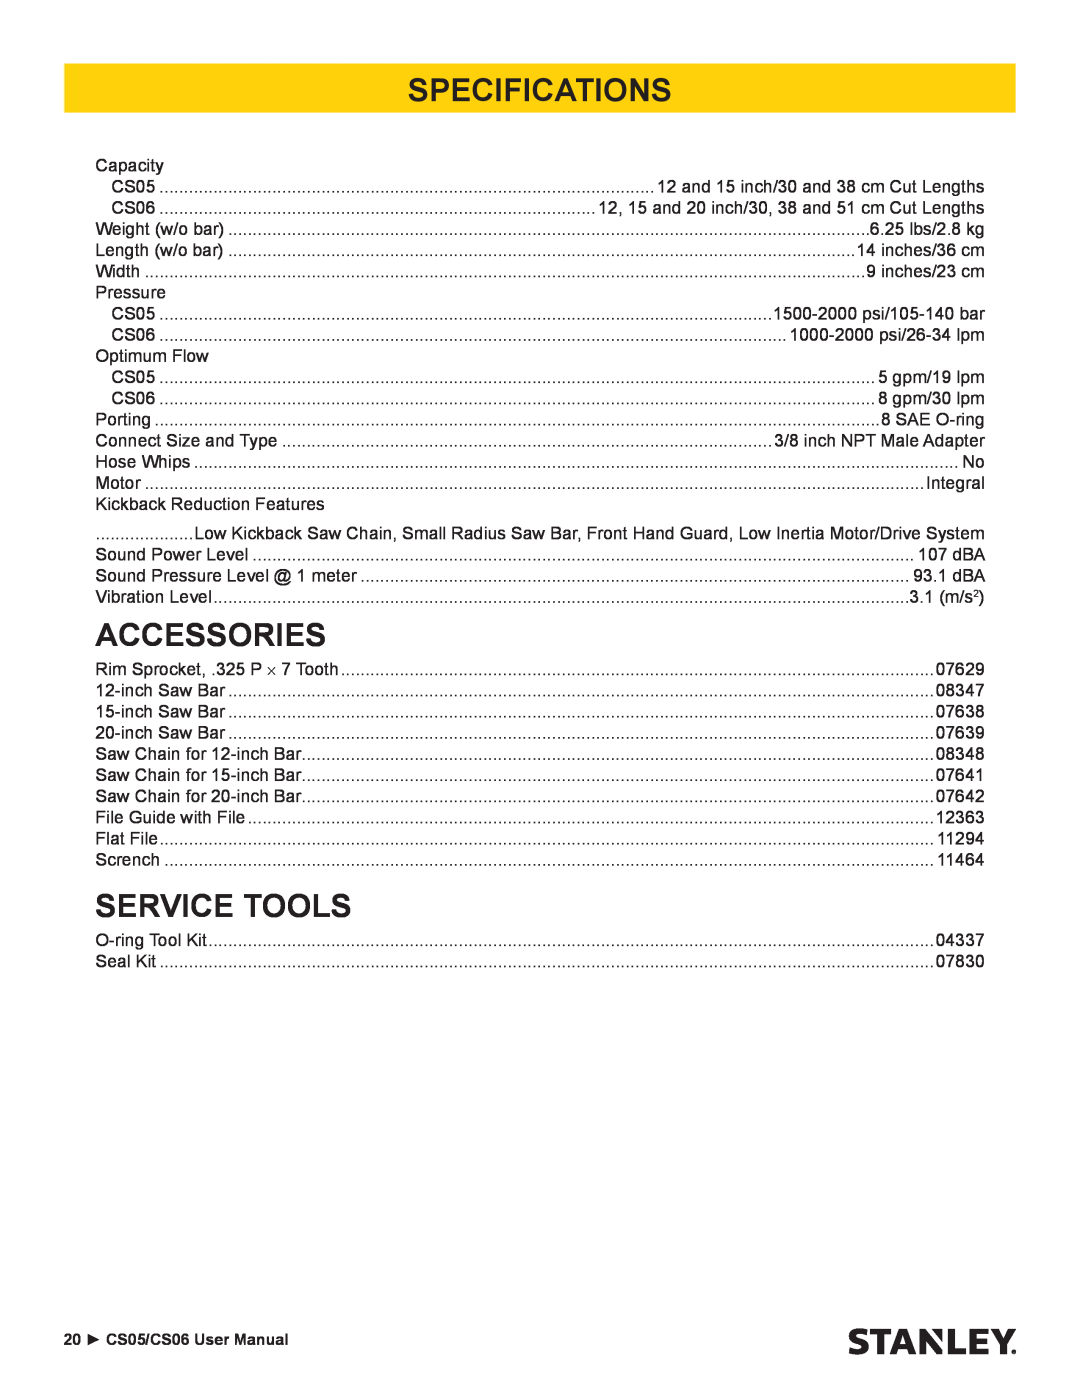 Stanley Black & Decker CS06, CS05 manual Accessories, Service Tools, Specifications 